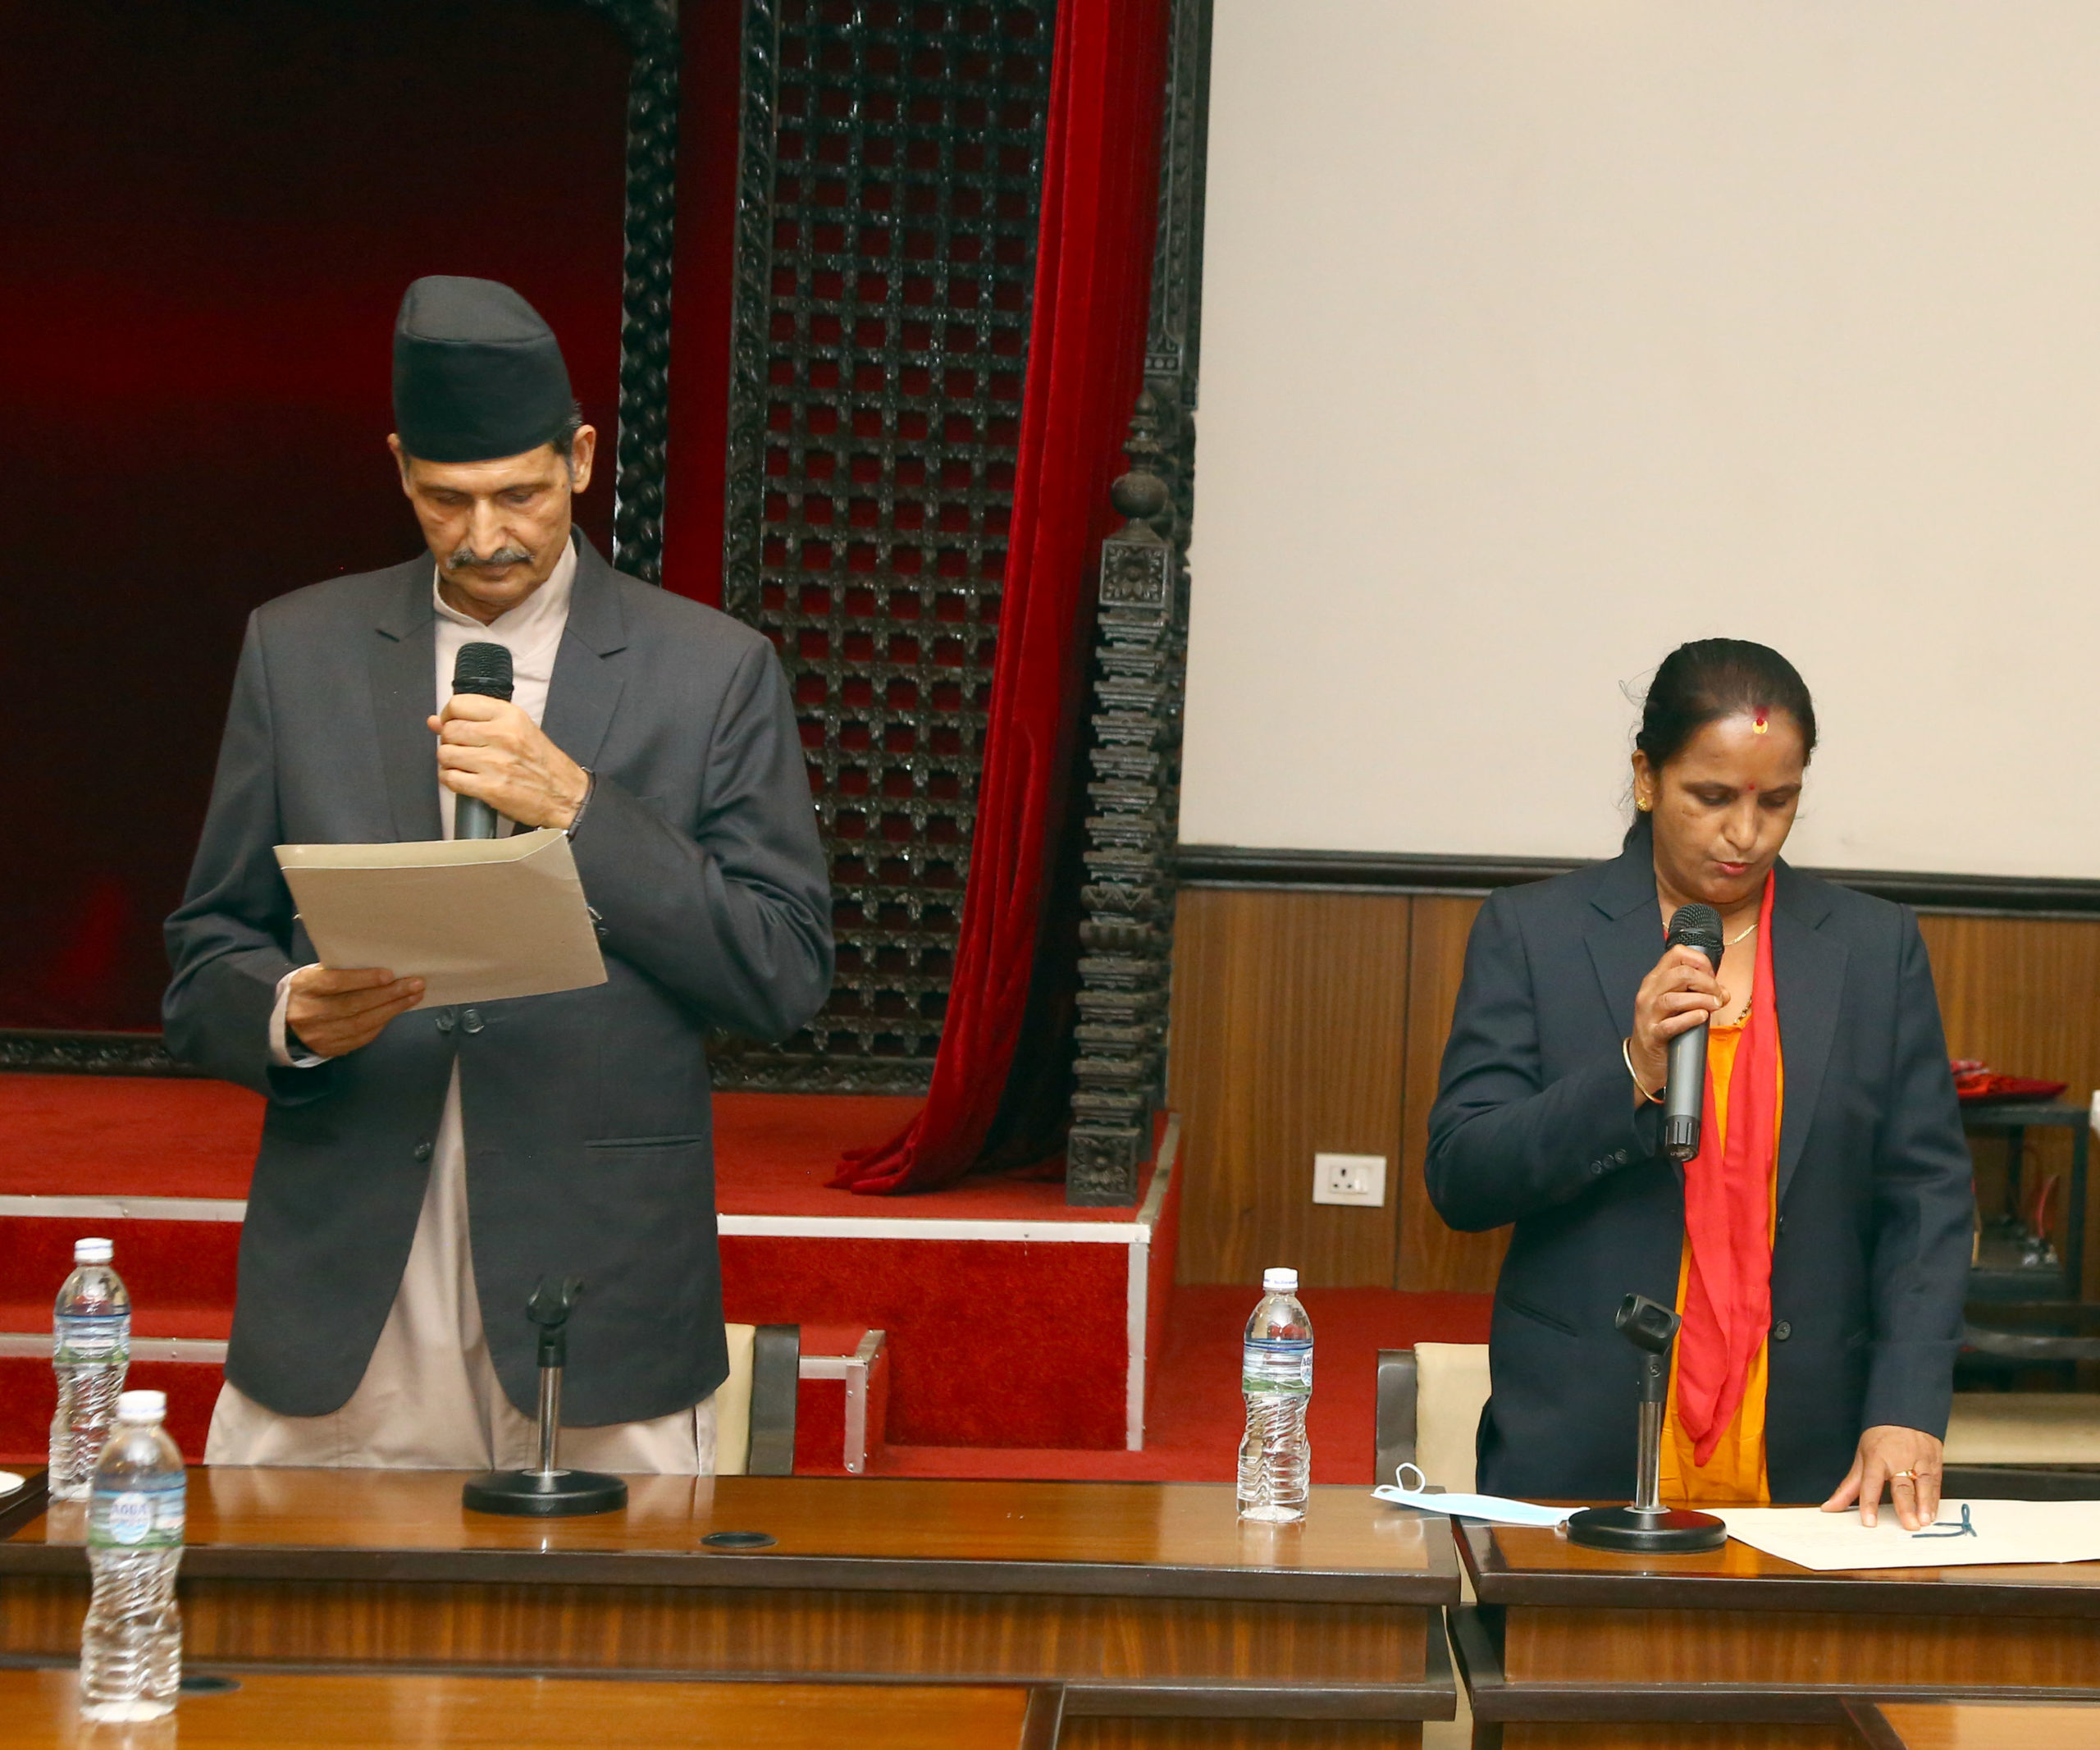 Newly elected Samajwadi Party lawmaker Sitaula takes oath